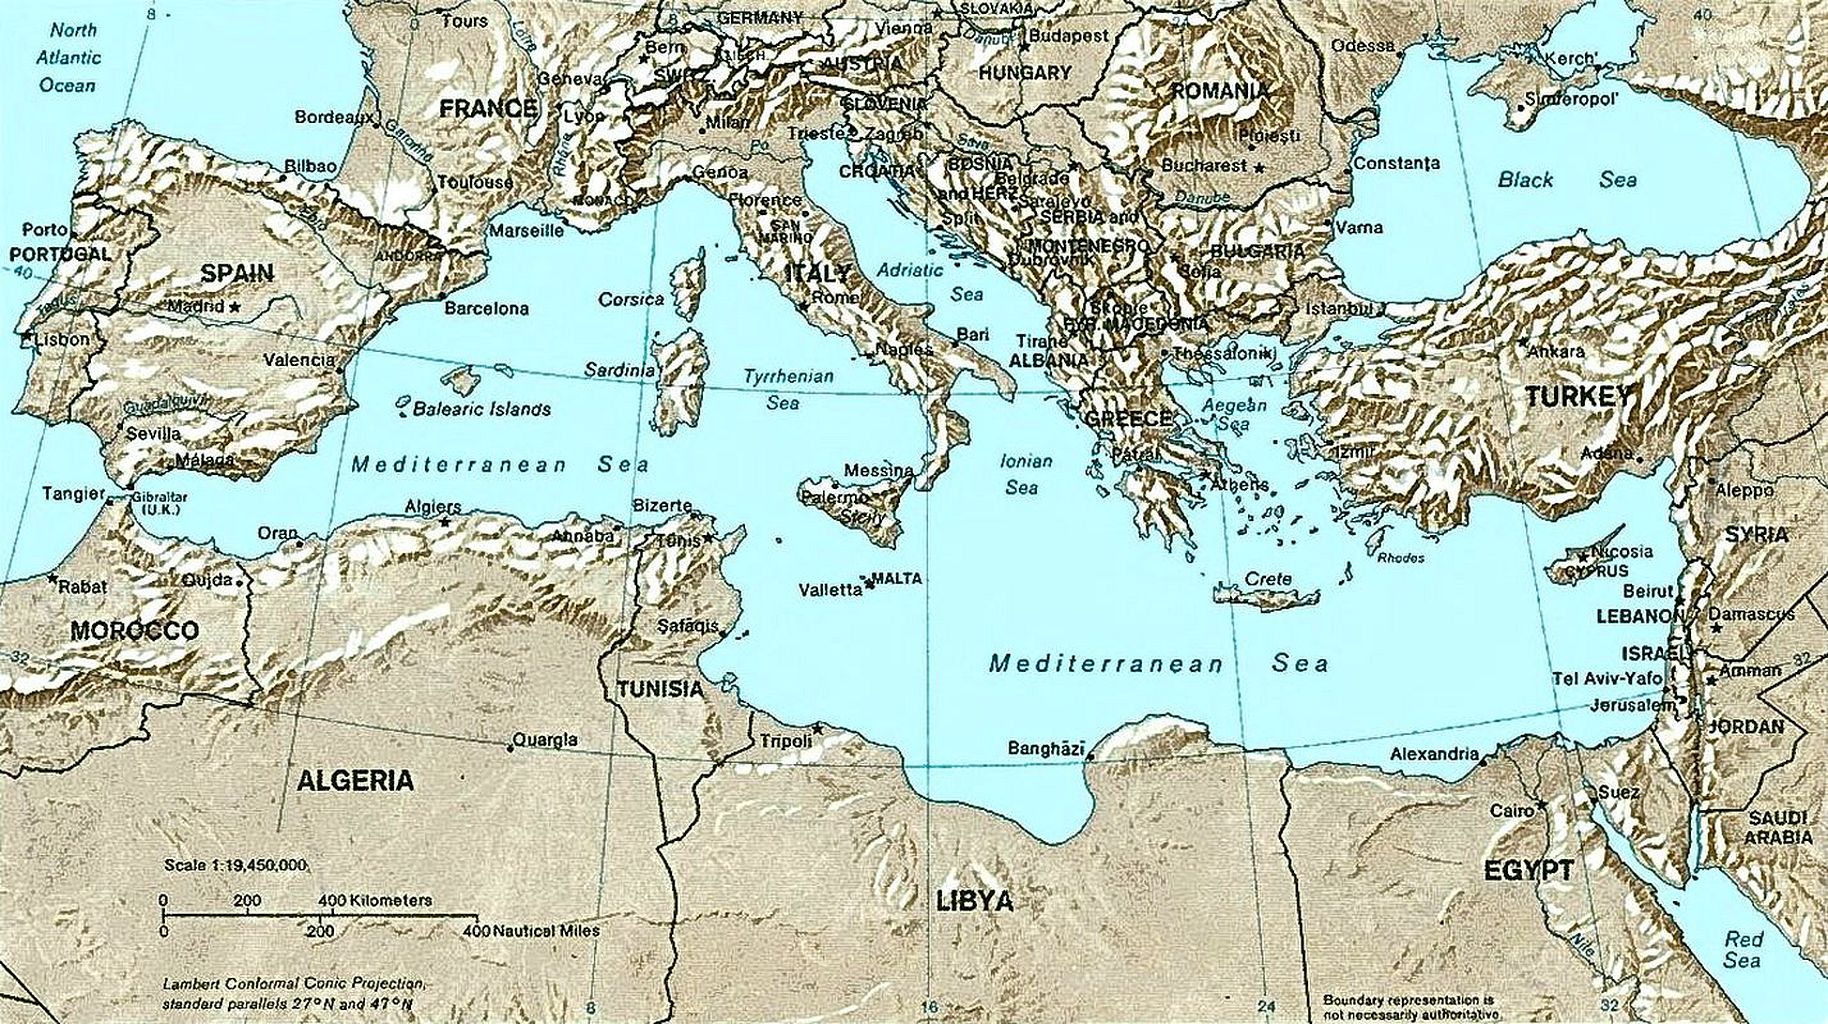 (Mediterranean Sea)